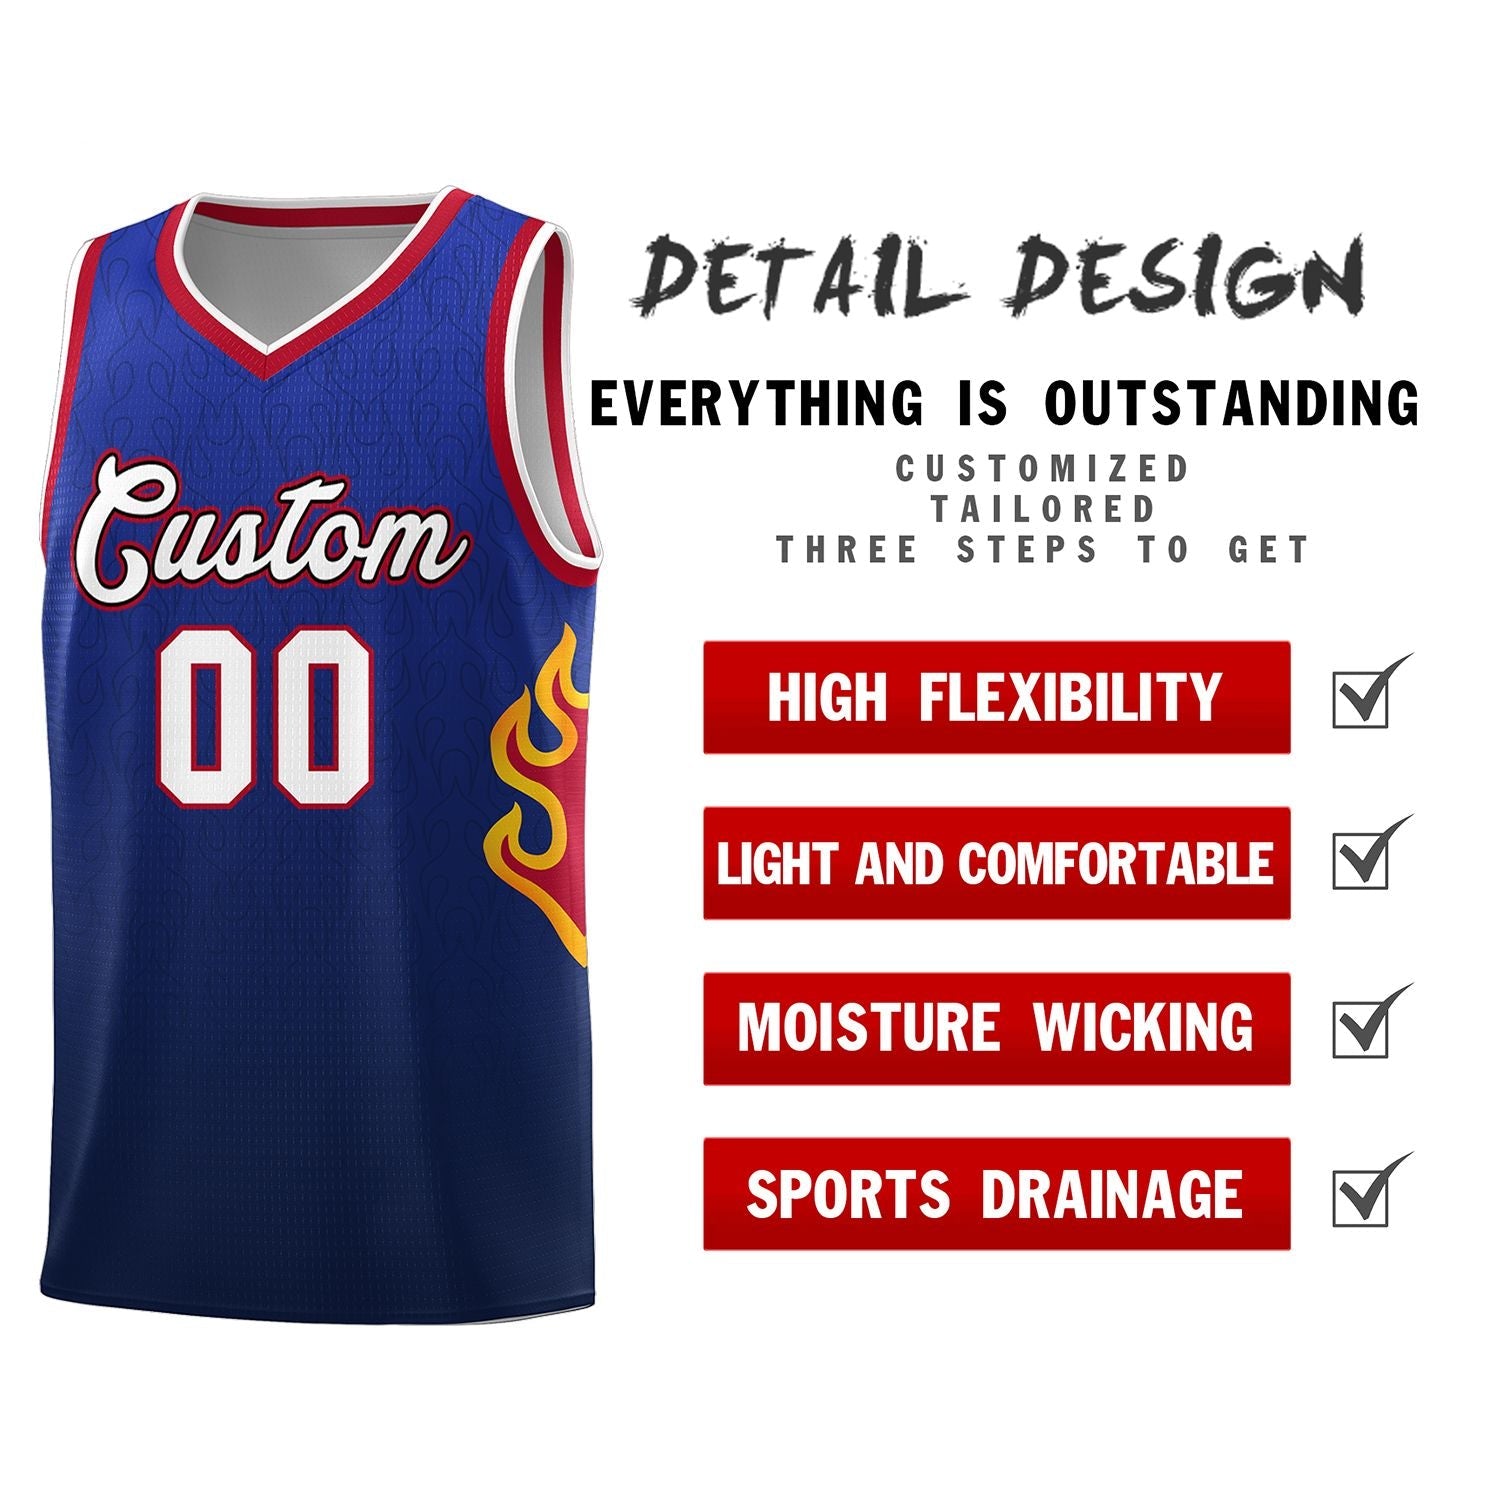 Custom Royal Navy-White Flame Gradient Fashion Sports Uniform Basketball Jersey